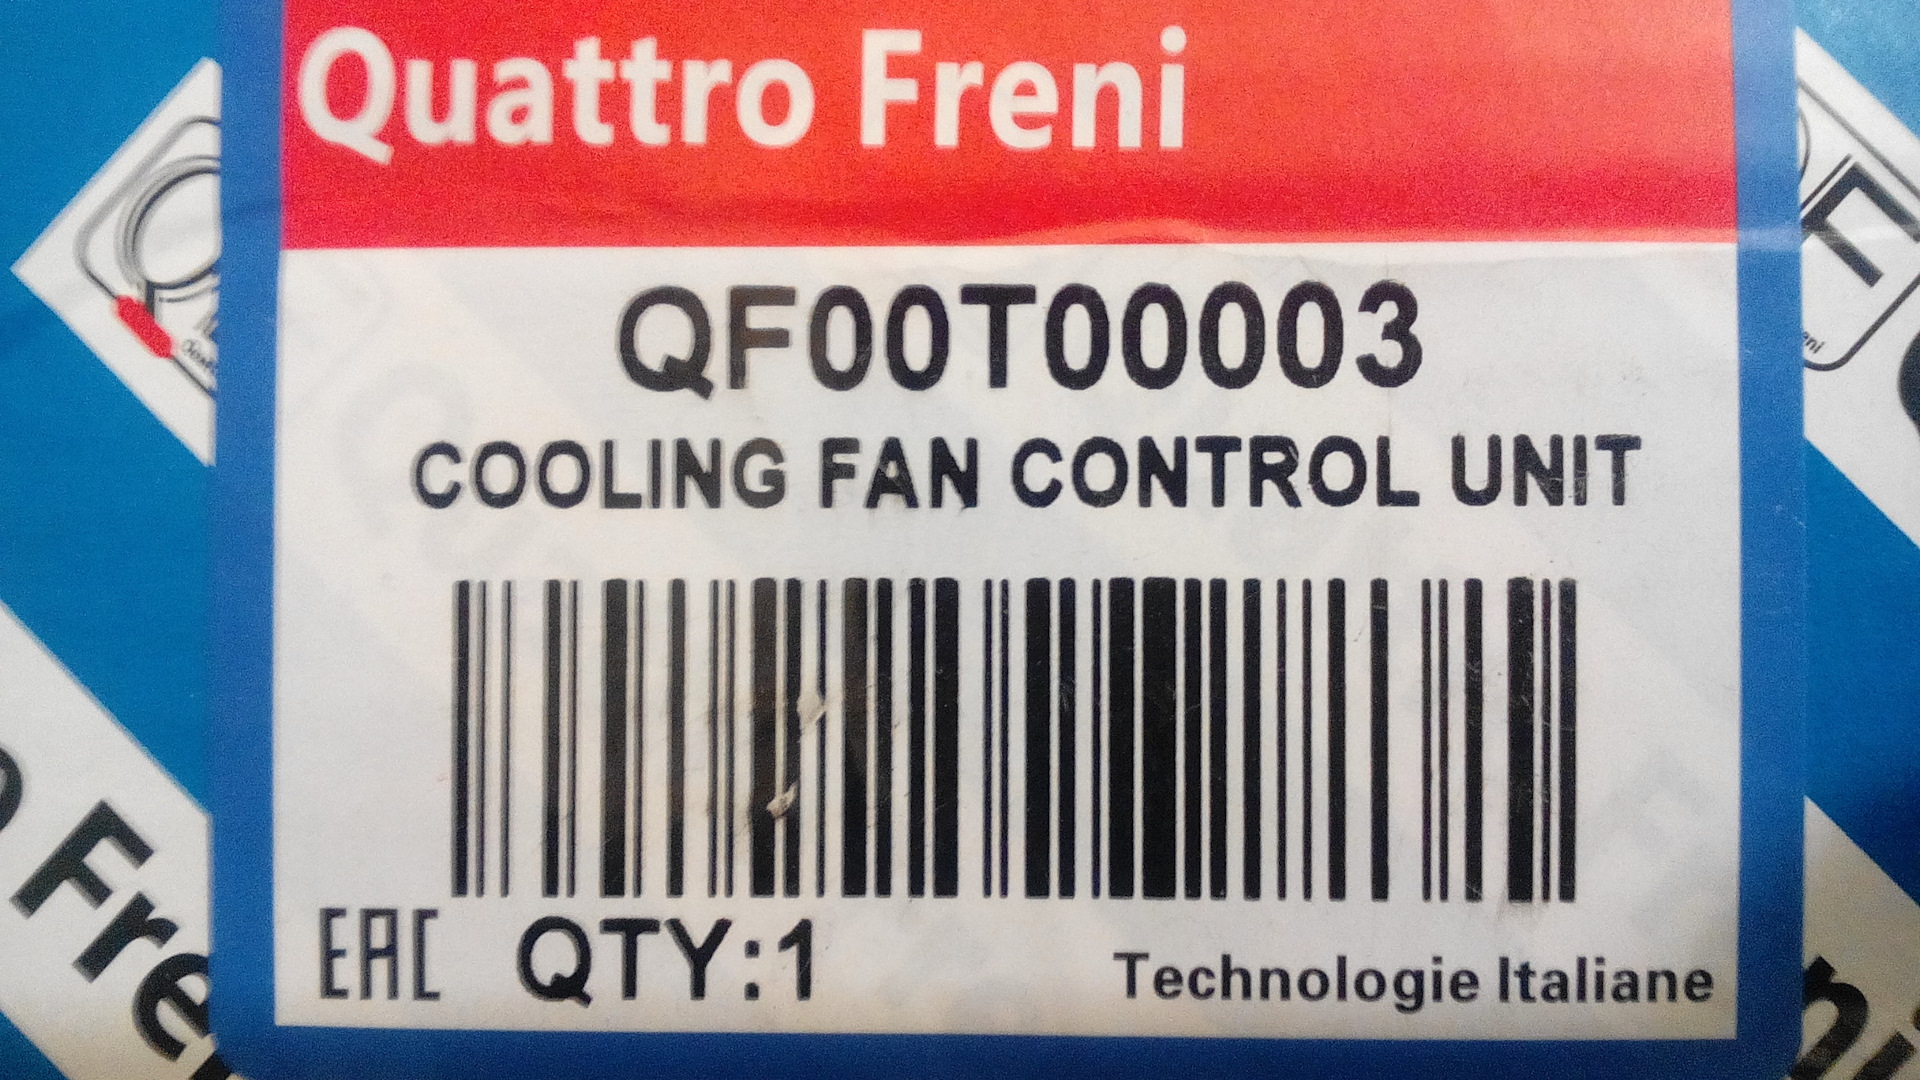 Freni страна производитель. Qf41m00001. Quattro freni qf00t01374 клапан системы отопления отзывы.